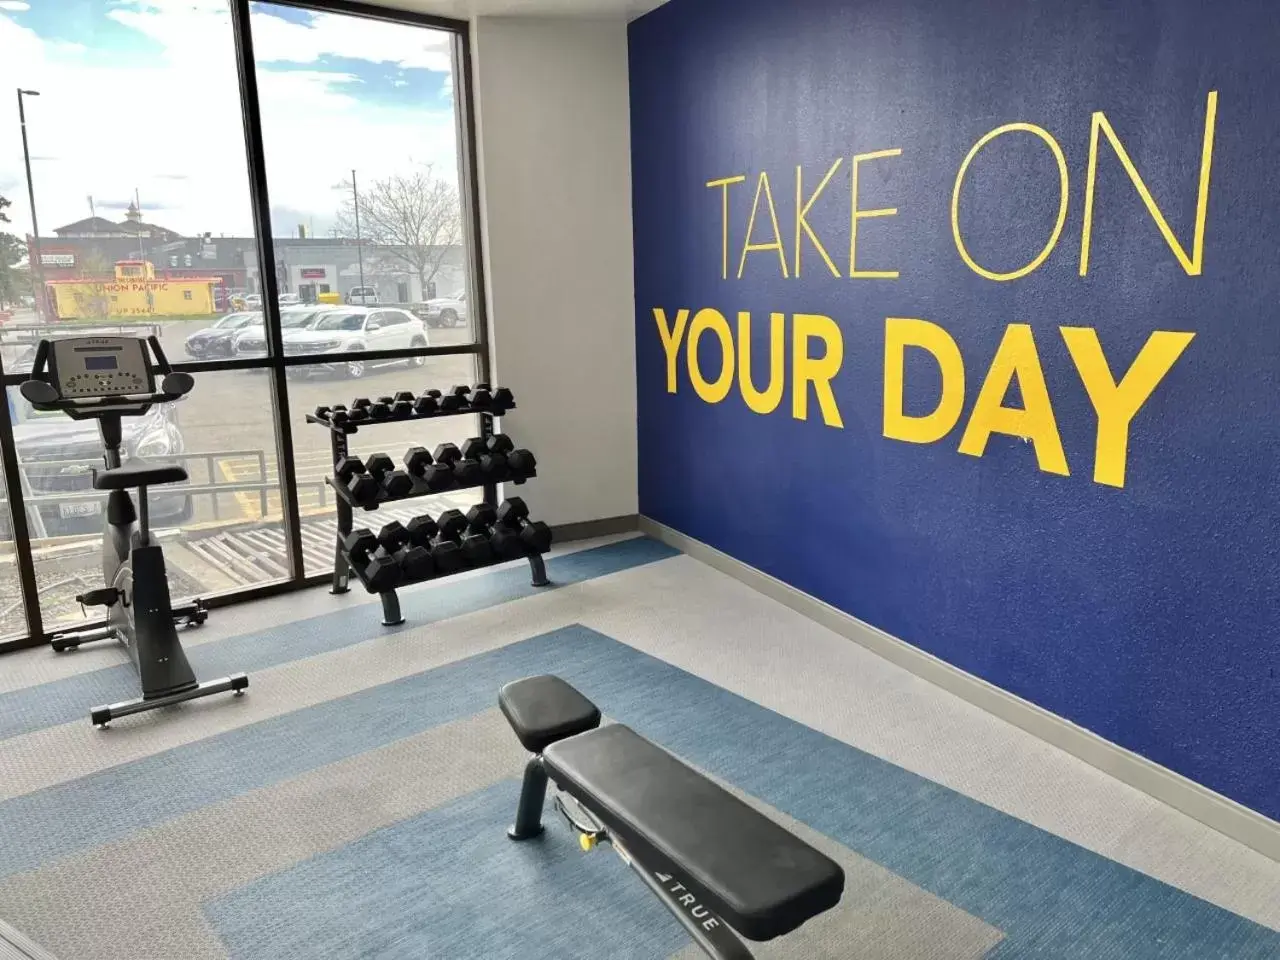 Fitness centre/facilities, Fitness Center/Facilities in Comfort Suites Idaho Falls